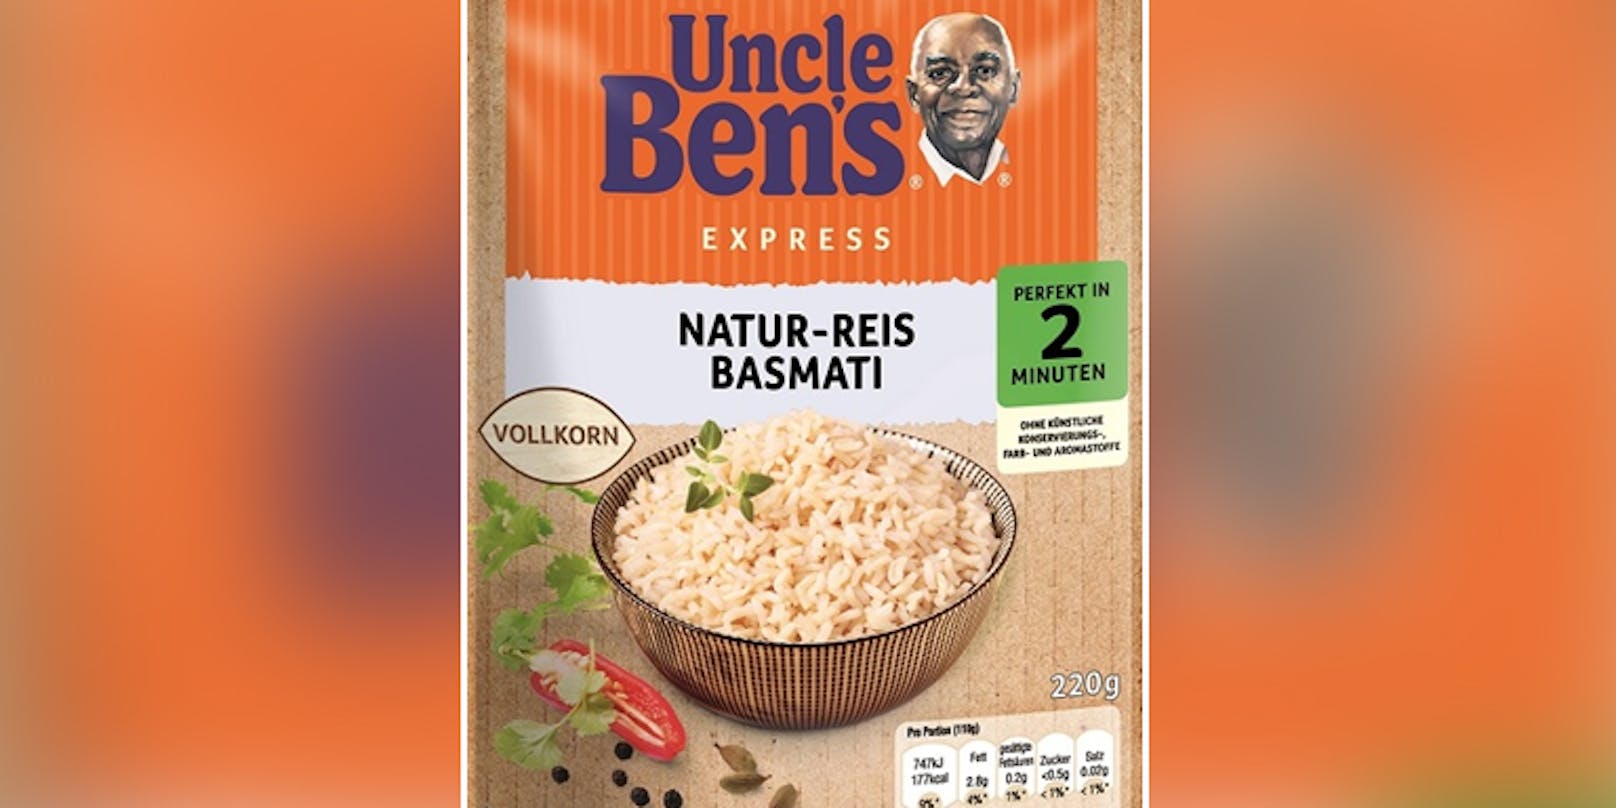 Mars Food ruft Uncle Ben’s Express Natur-Reis Basmati zurück